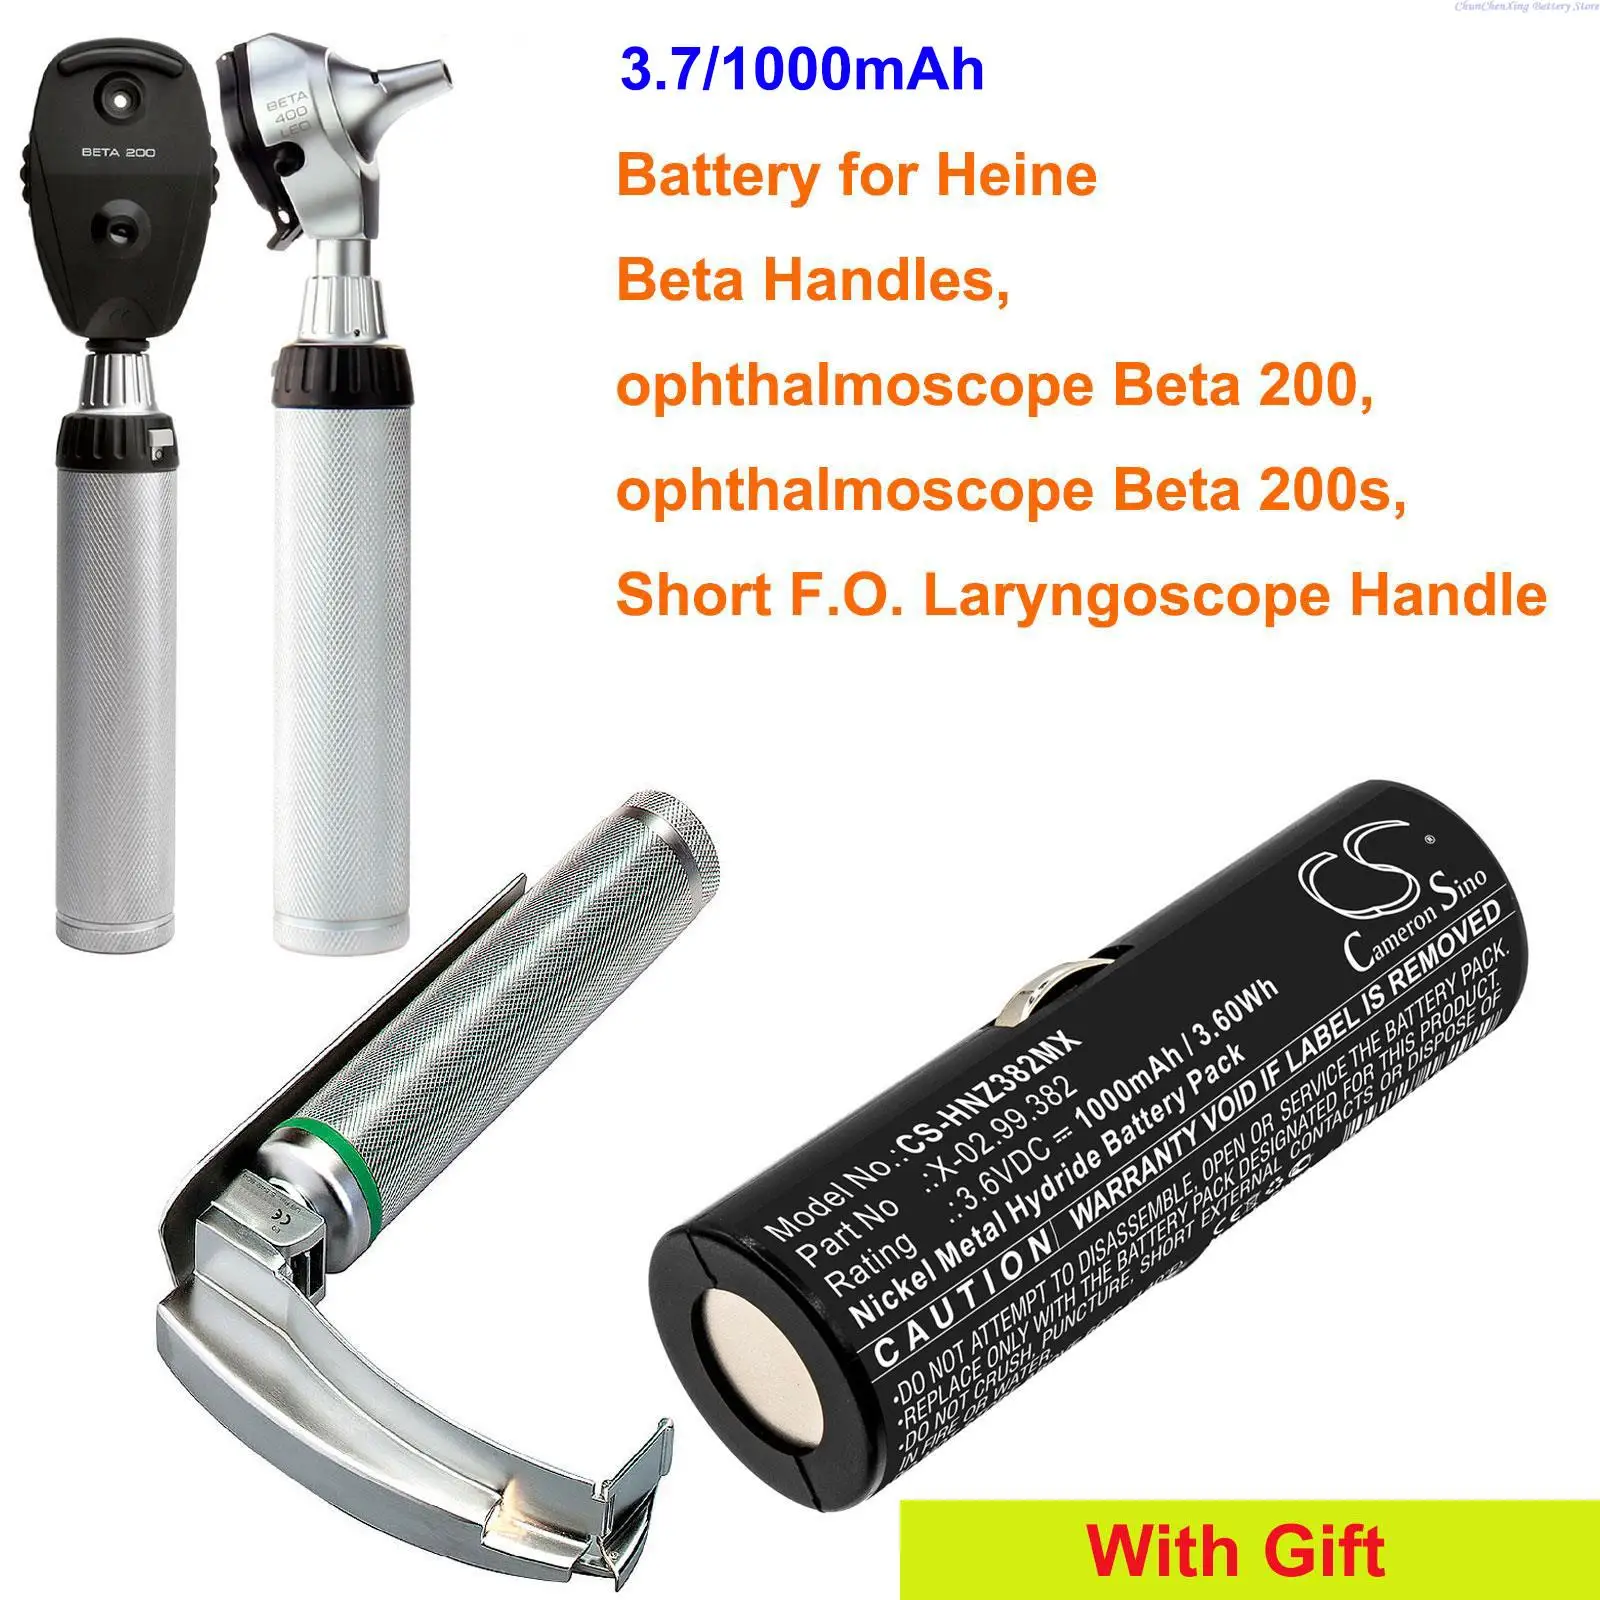 

Cameron Sino 1000mAh Battery for Heine Beta Handles, ophthalmoscope Beta 200, Beta 200s, Short F.O. Laryngoscope Handle